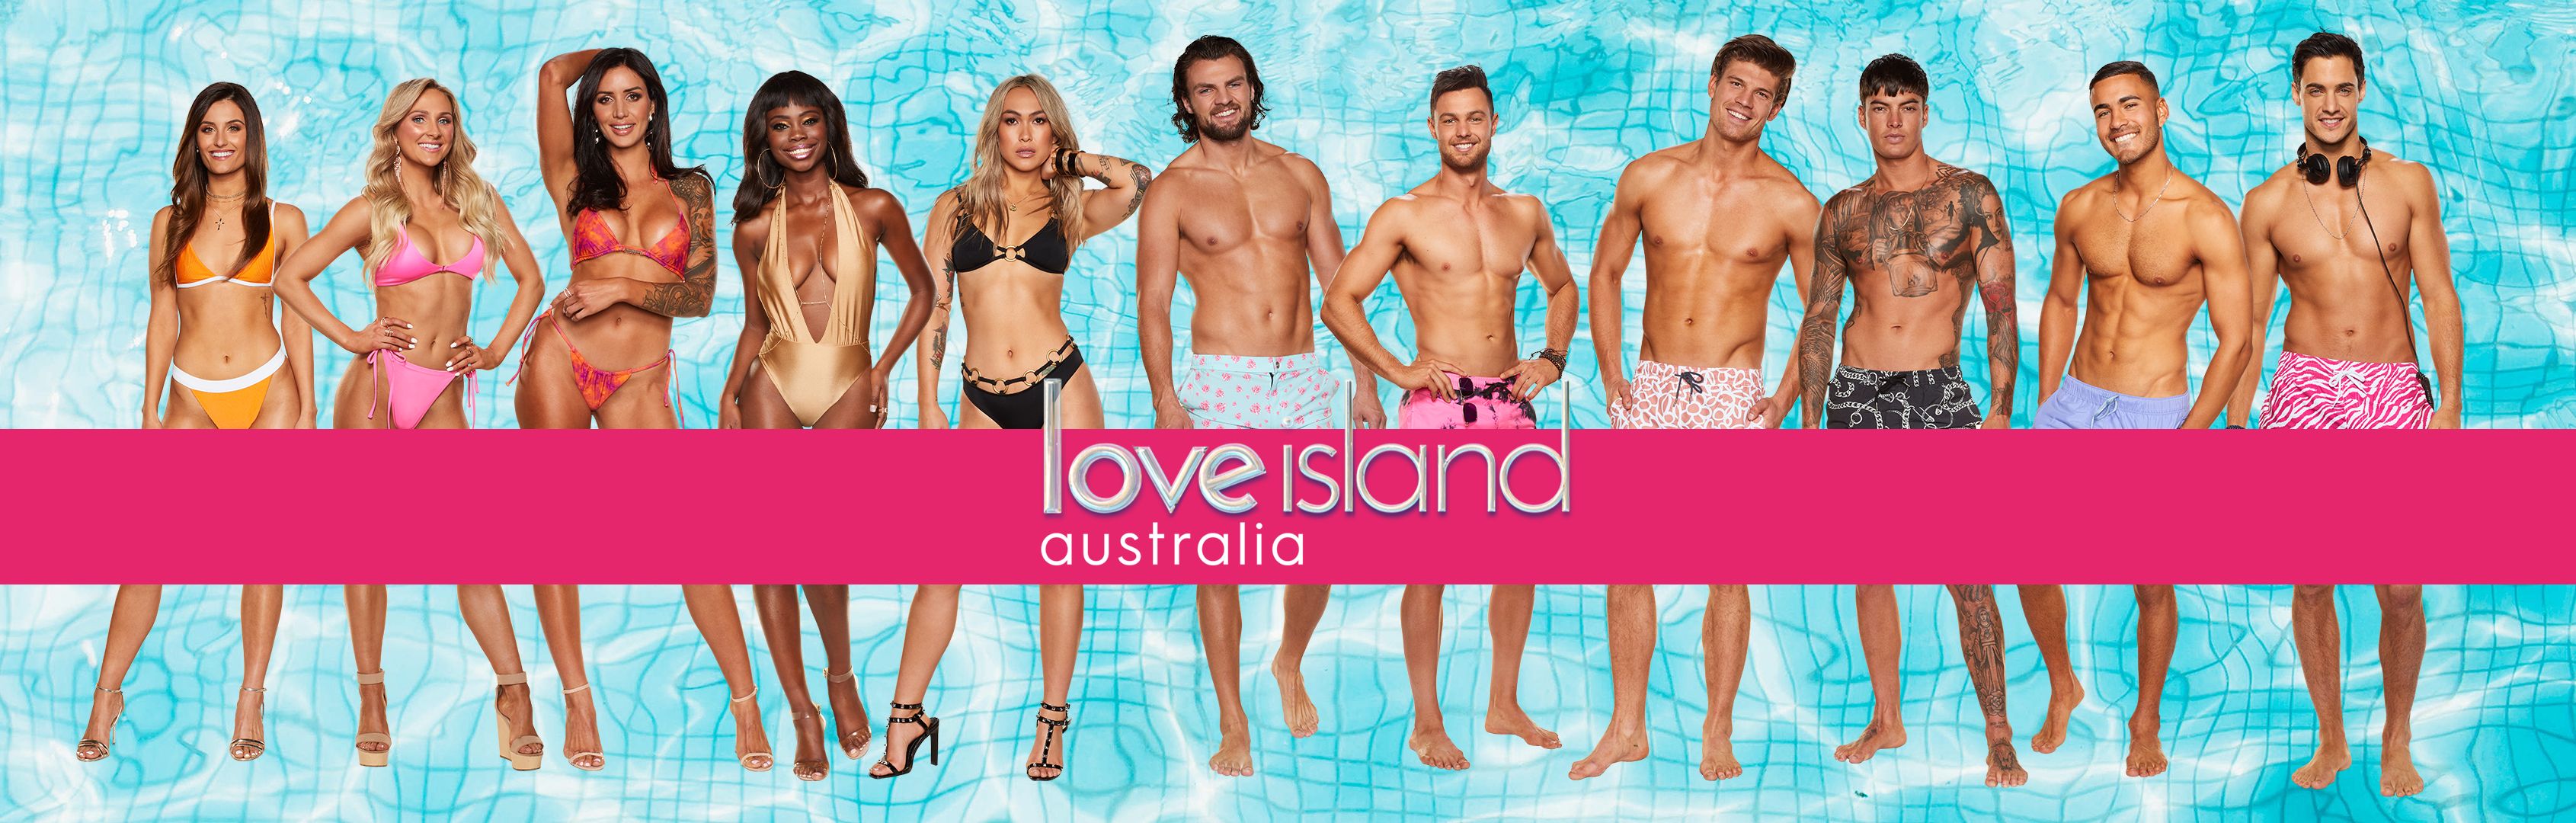 Watch Love Island Australia Season 3 Love Island Australia seas...